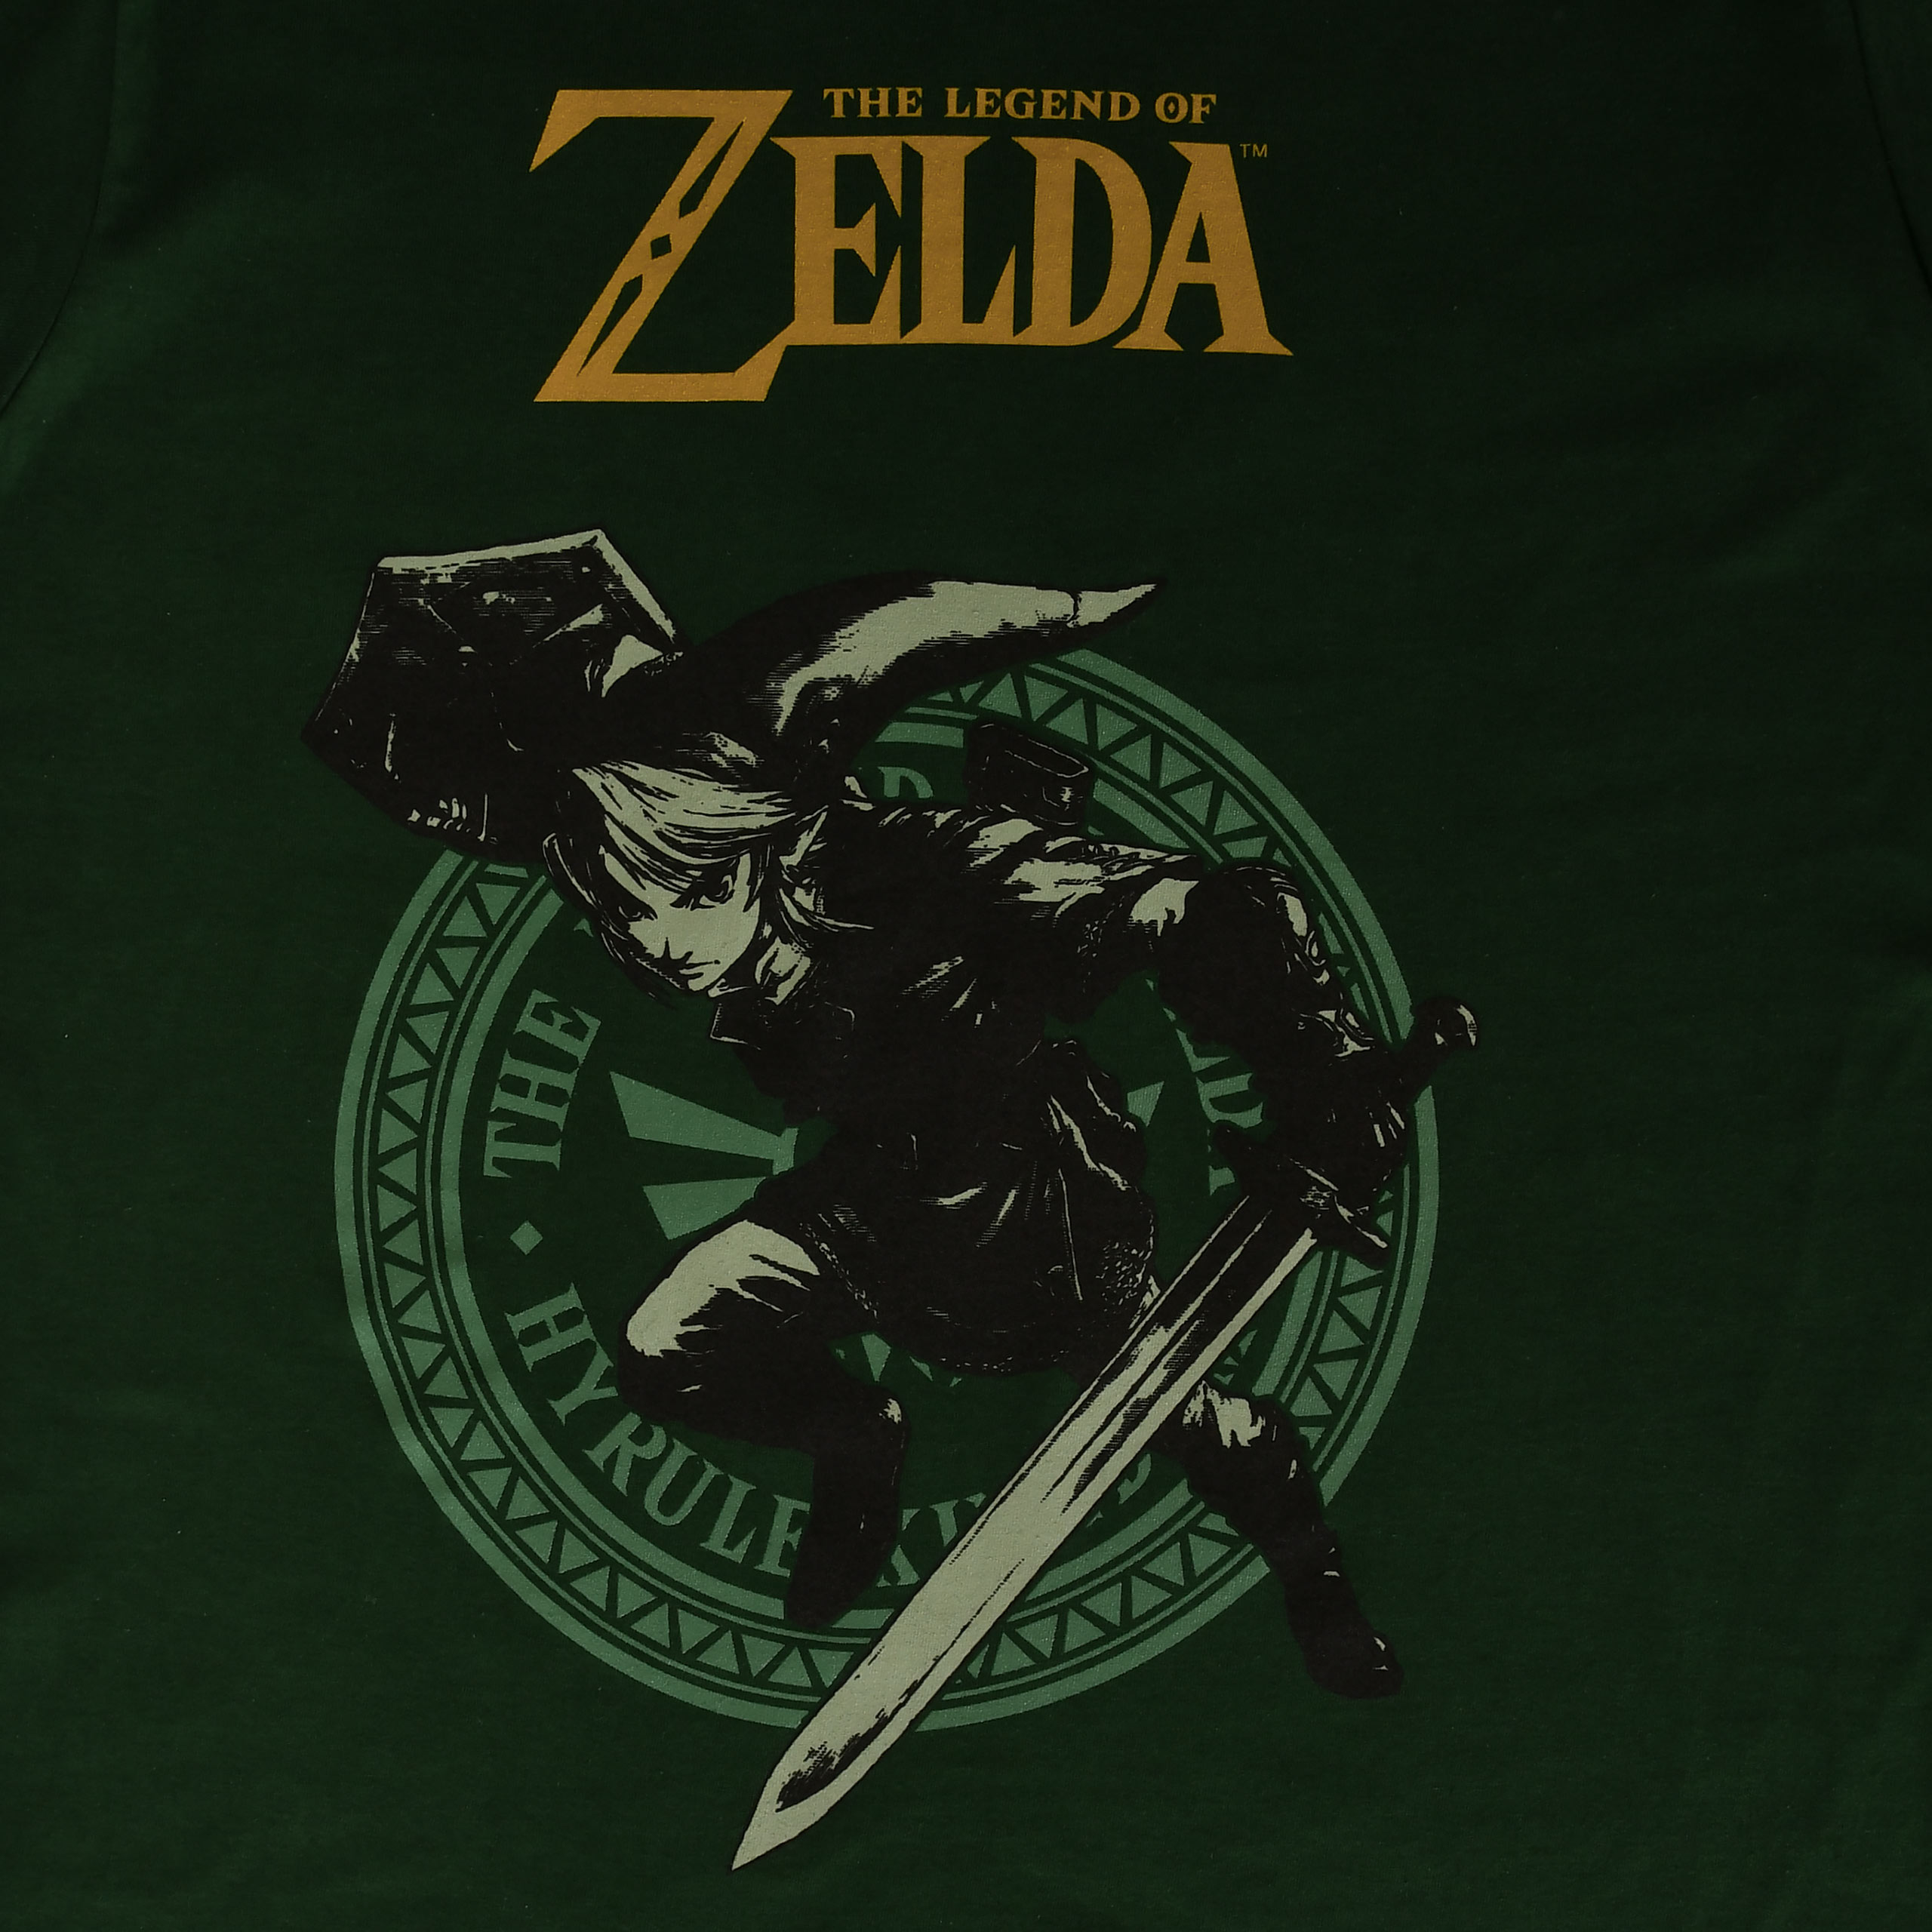 Zelda - Link Pose T-Shirt grün